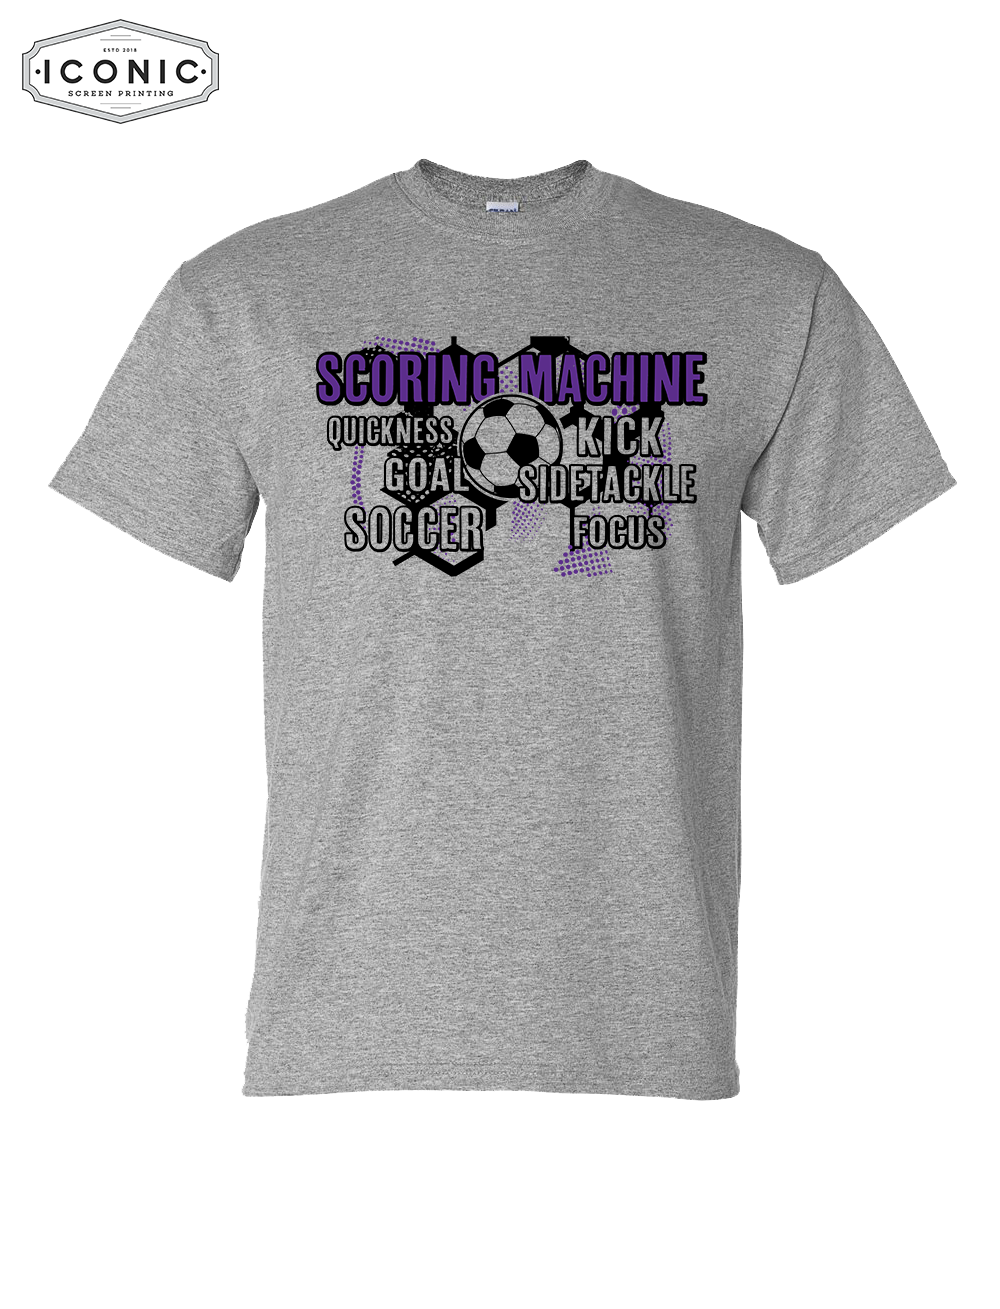 Soccer Scoring Machine - DryBlend T-shirt